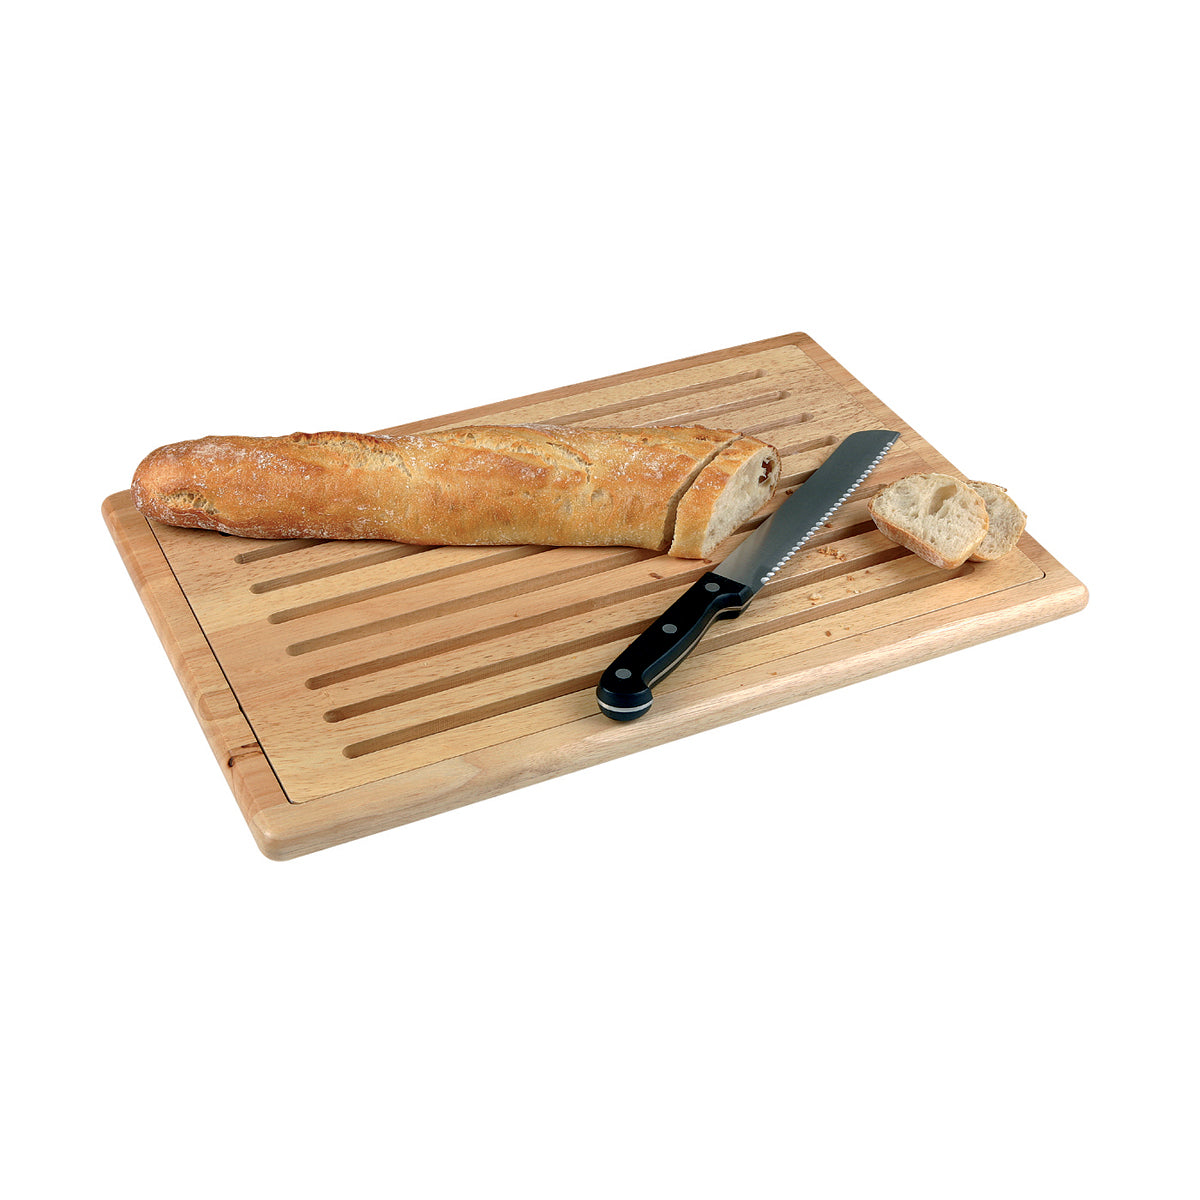 APS00956 Rubberwood Cutting Board with Crumb Shelf 530x325x20mm Tomkin Australia Hospitality Supplies